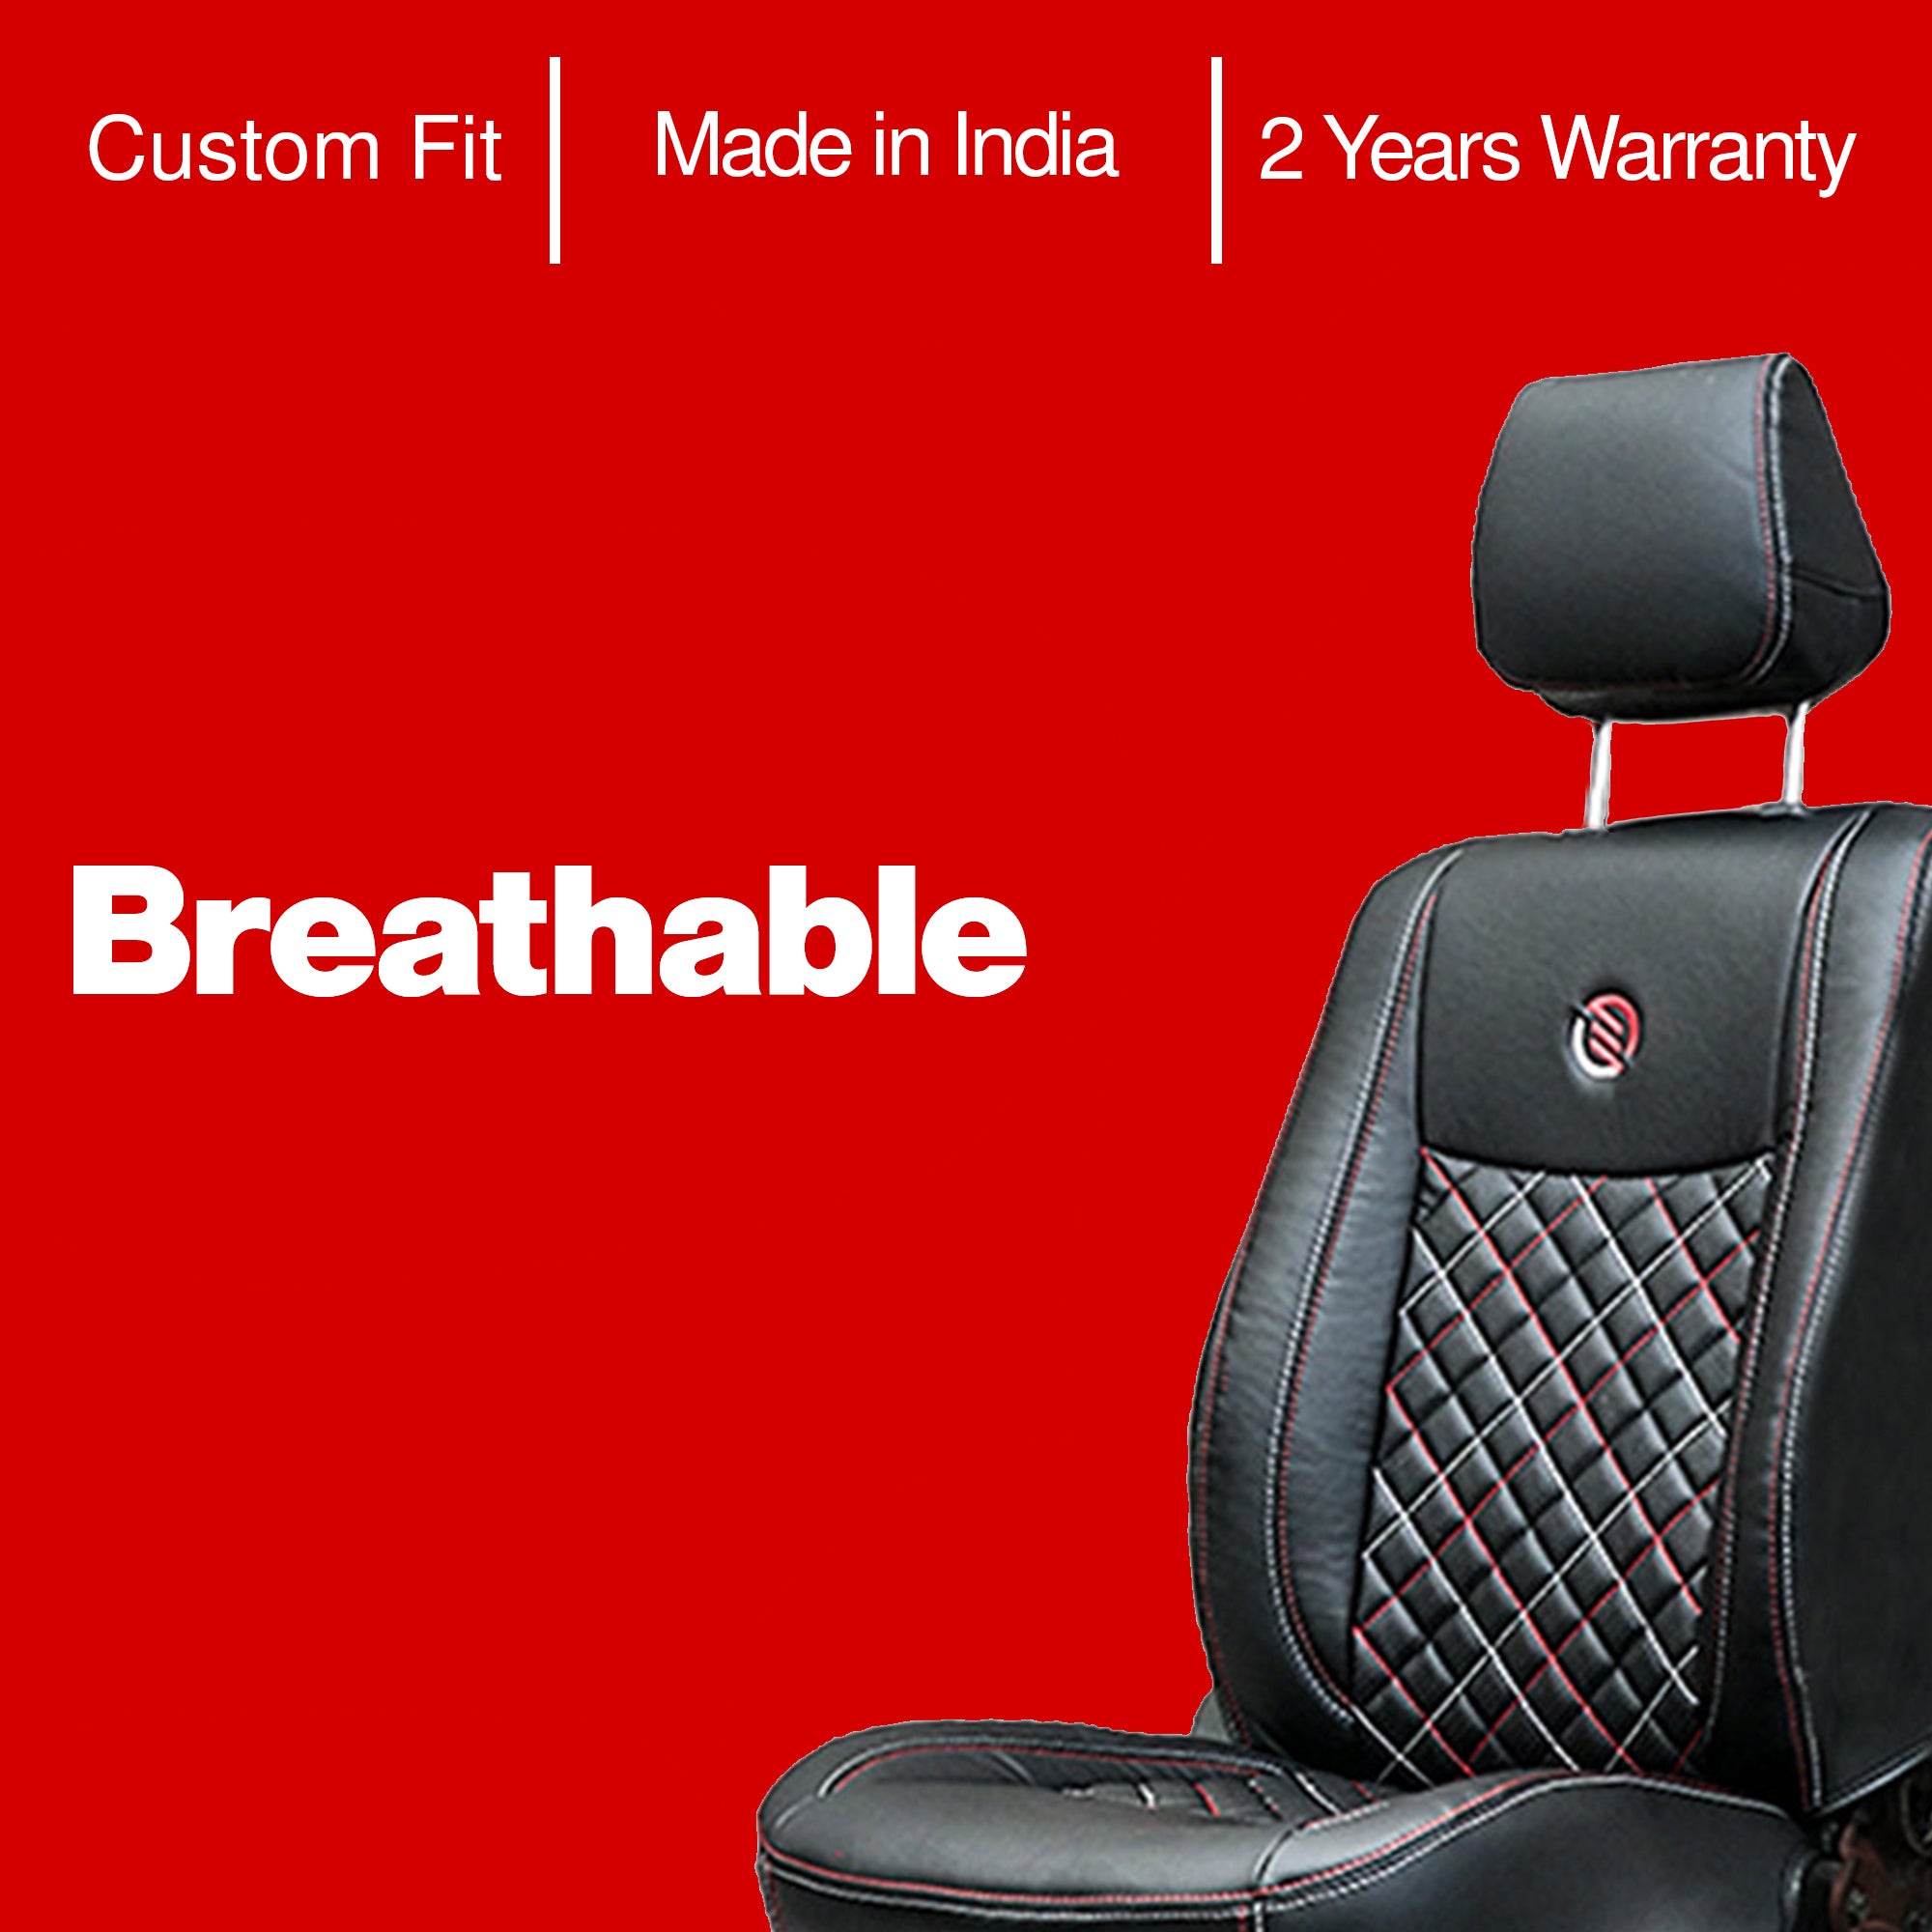 Luxury Premium Leatherette Car Seat Cover For Maruti Baleno Price in India  - Buy Luxury Premium Leatherette Car Seat Cover For Maruti Baleno online at